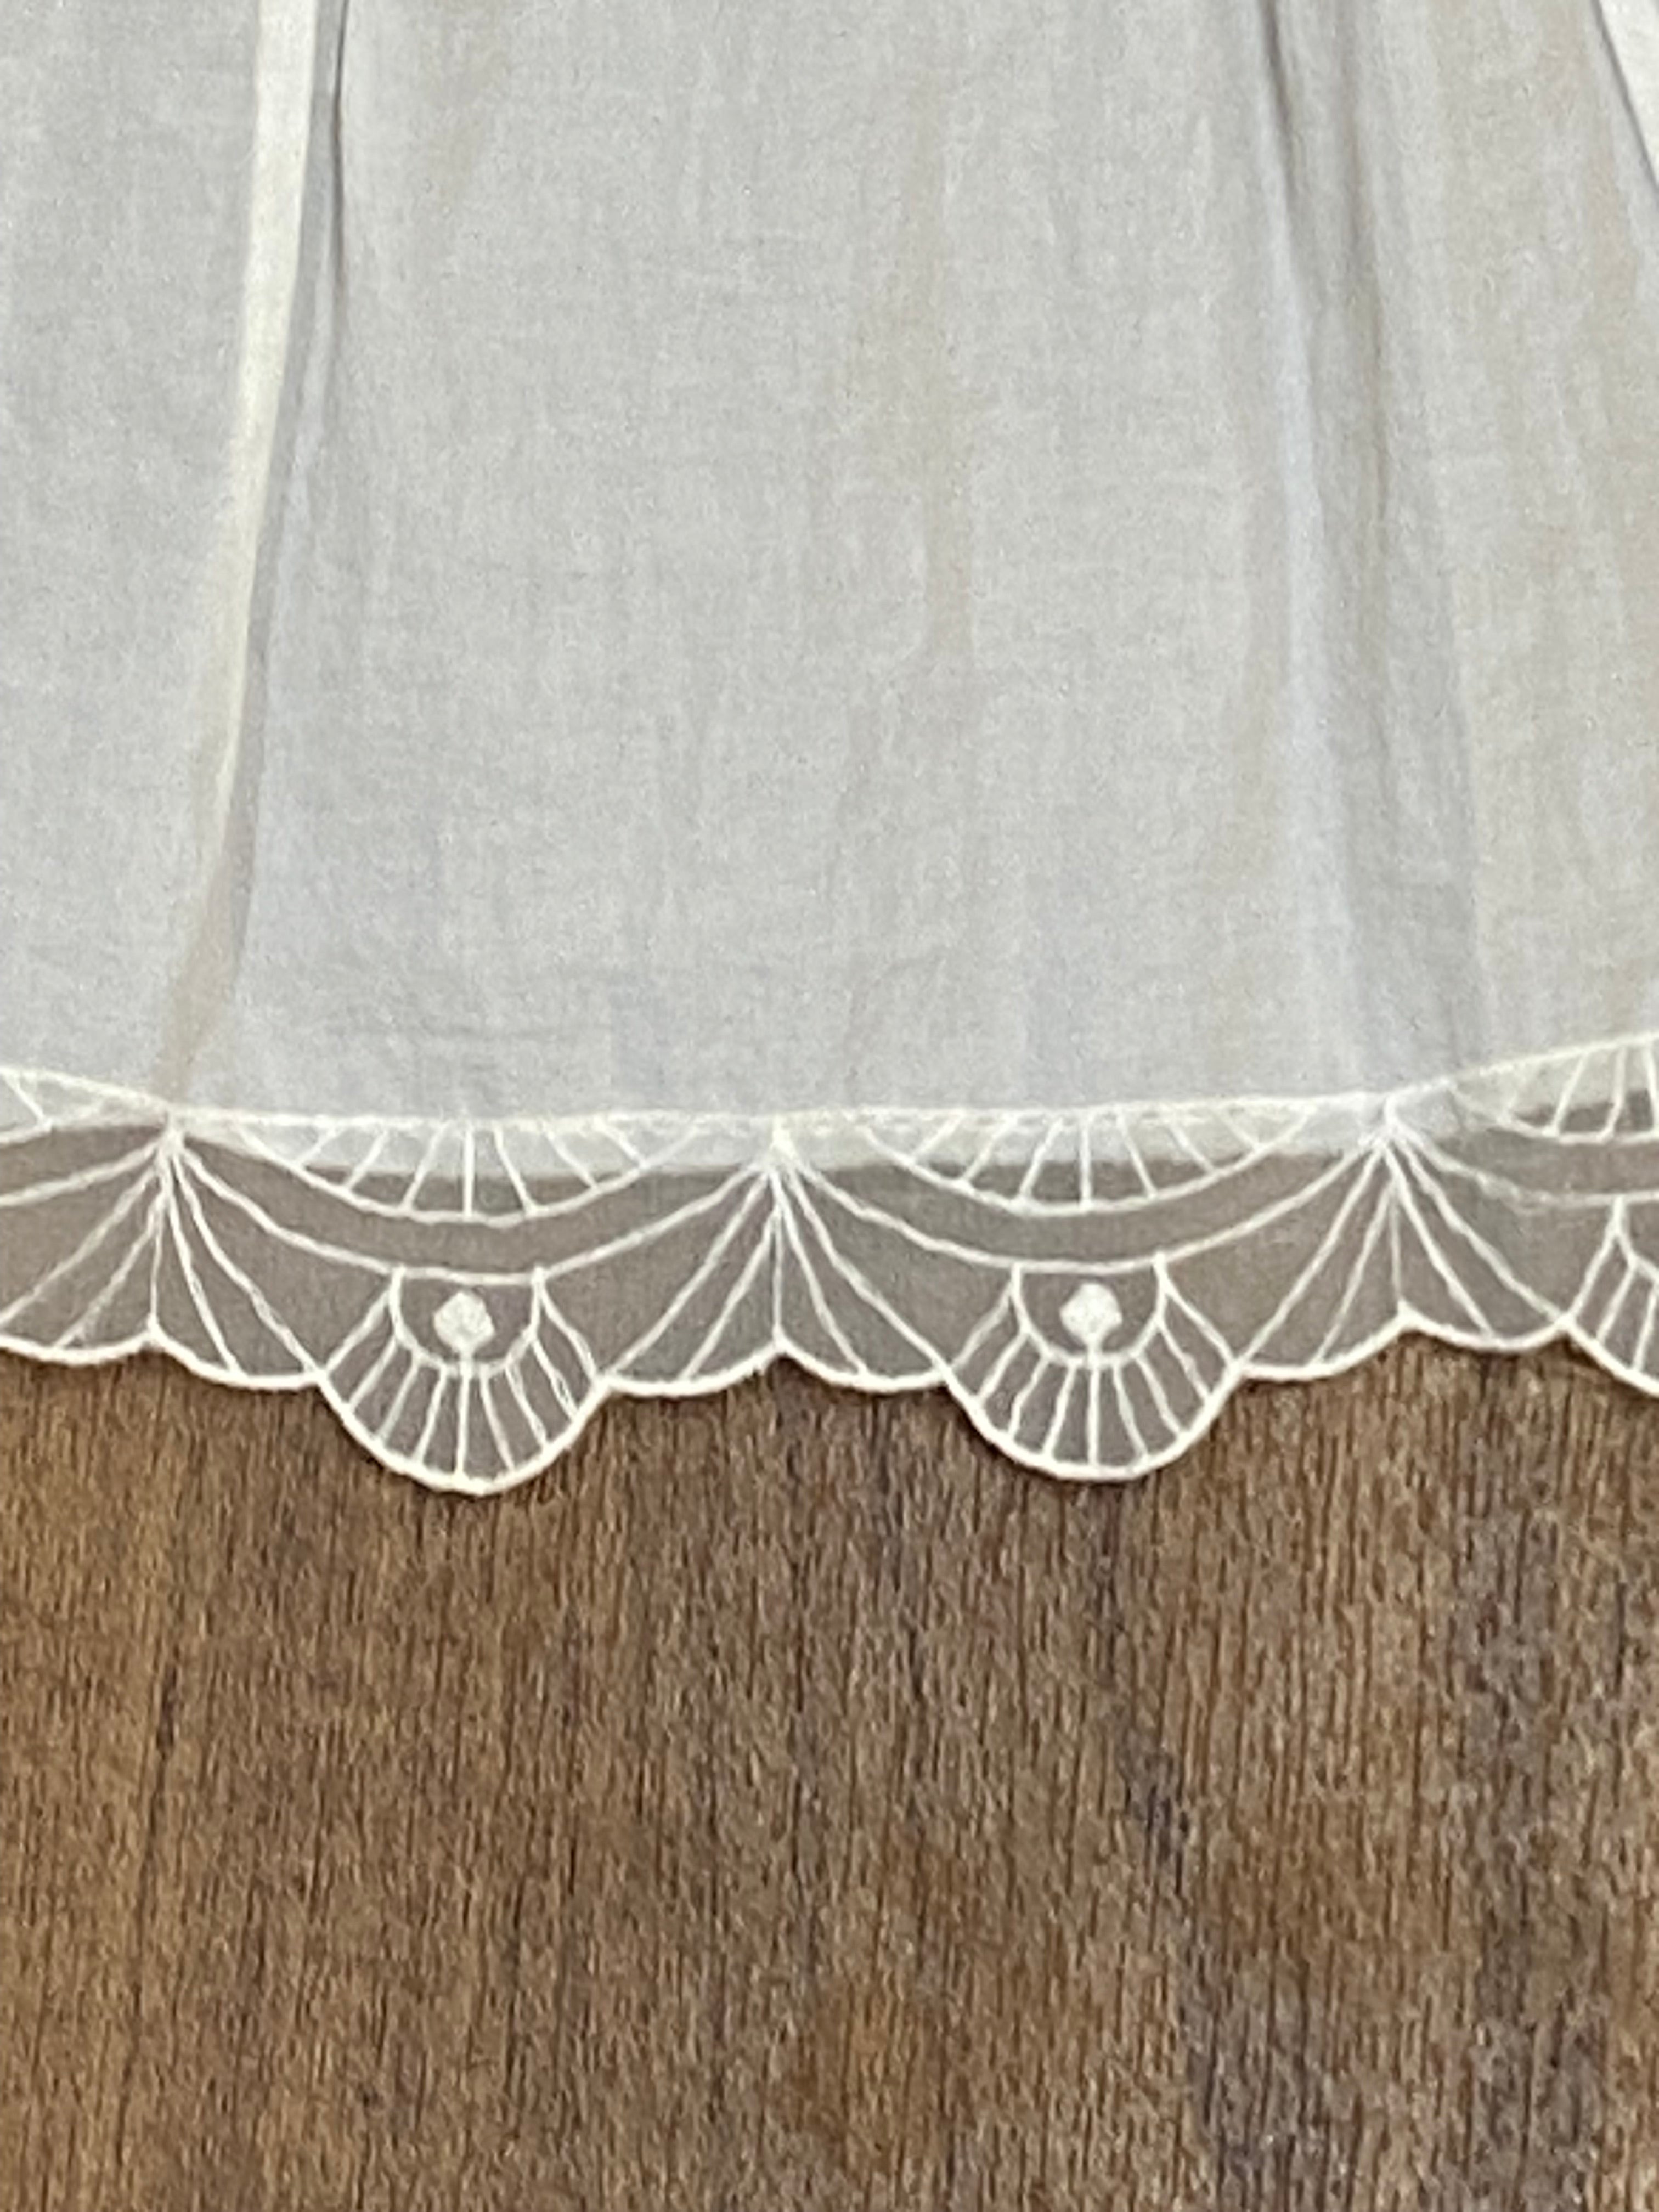 Originaler Petticoat True Vintage Unterrock, Rarität